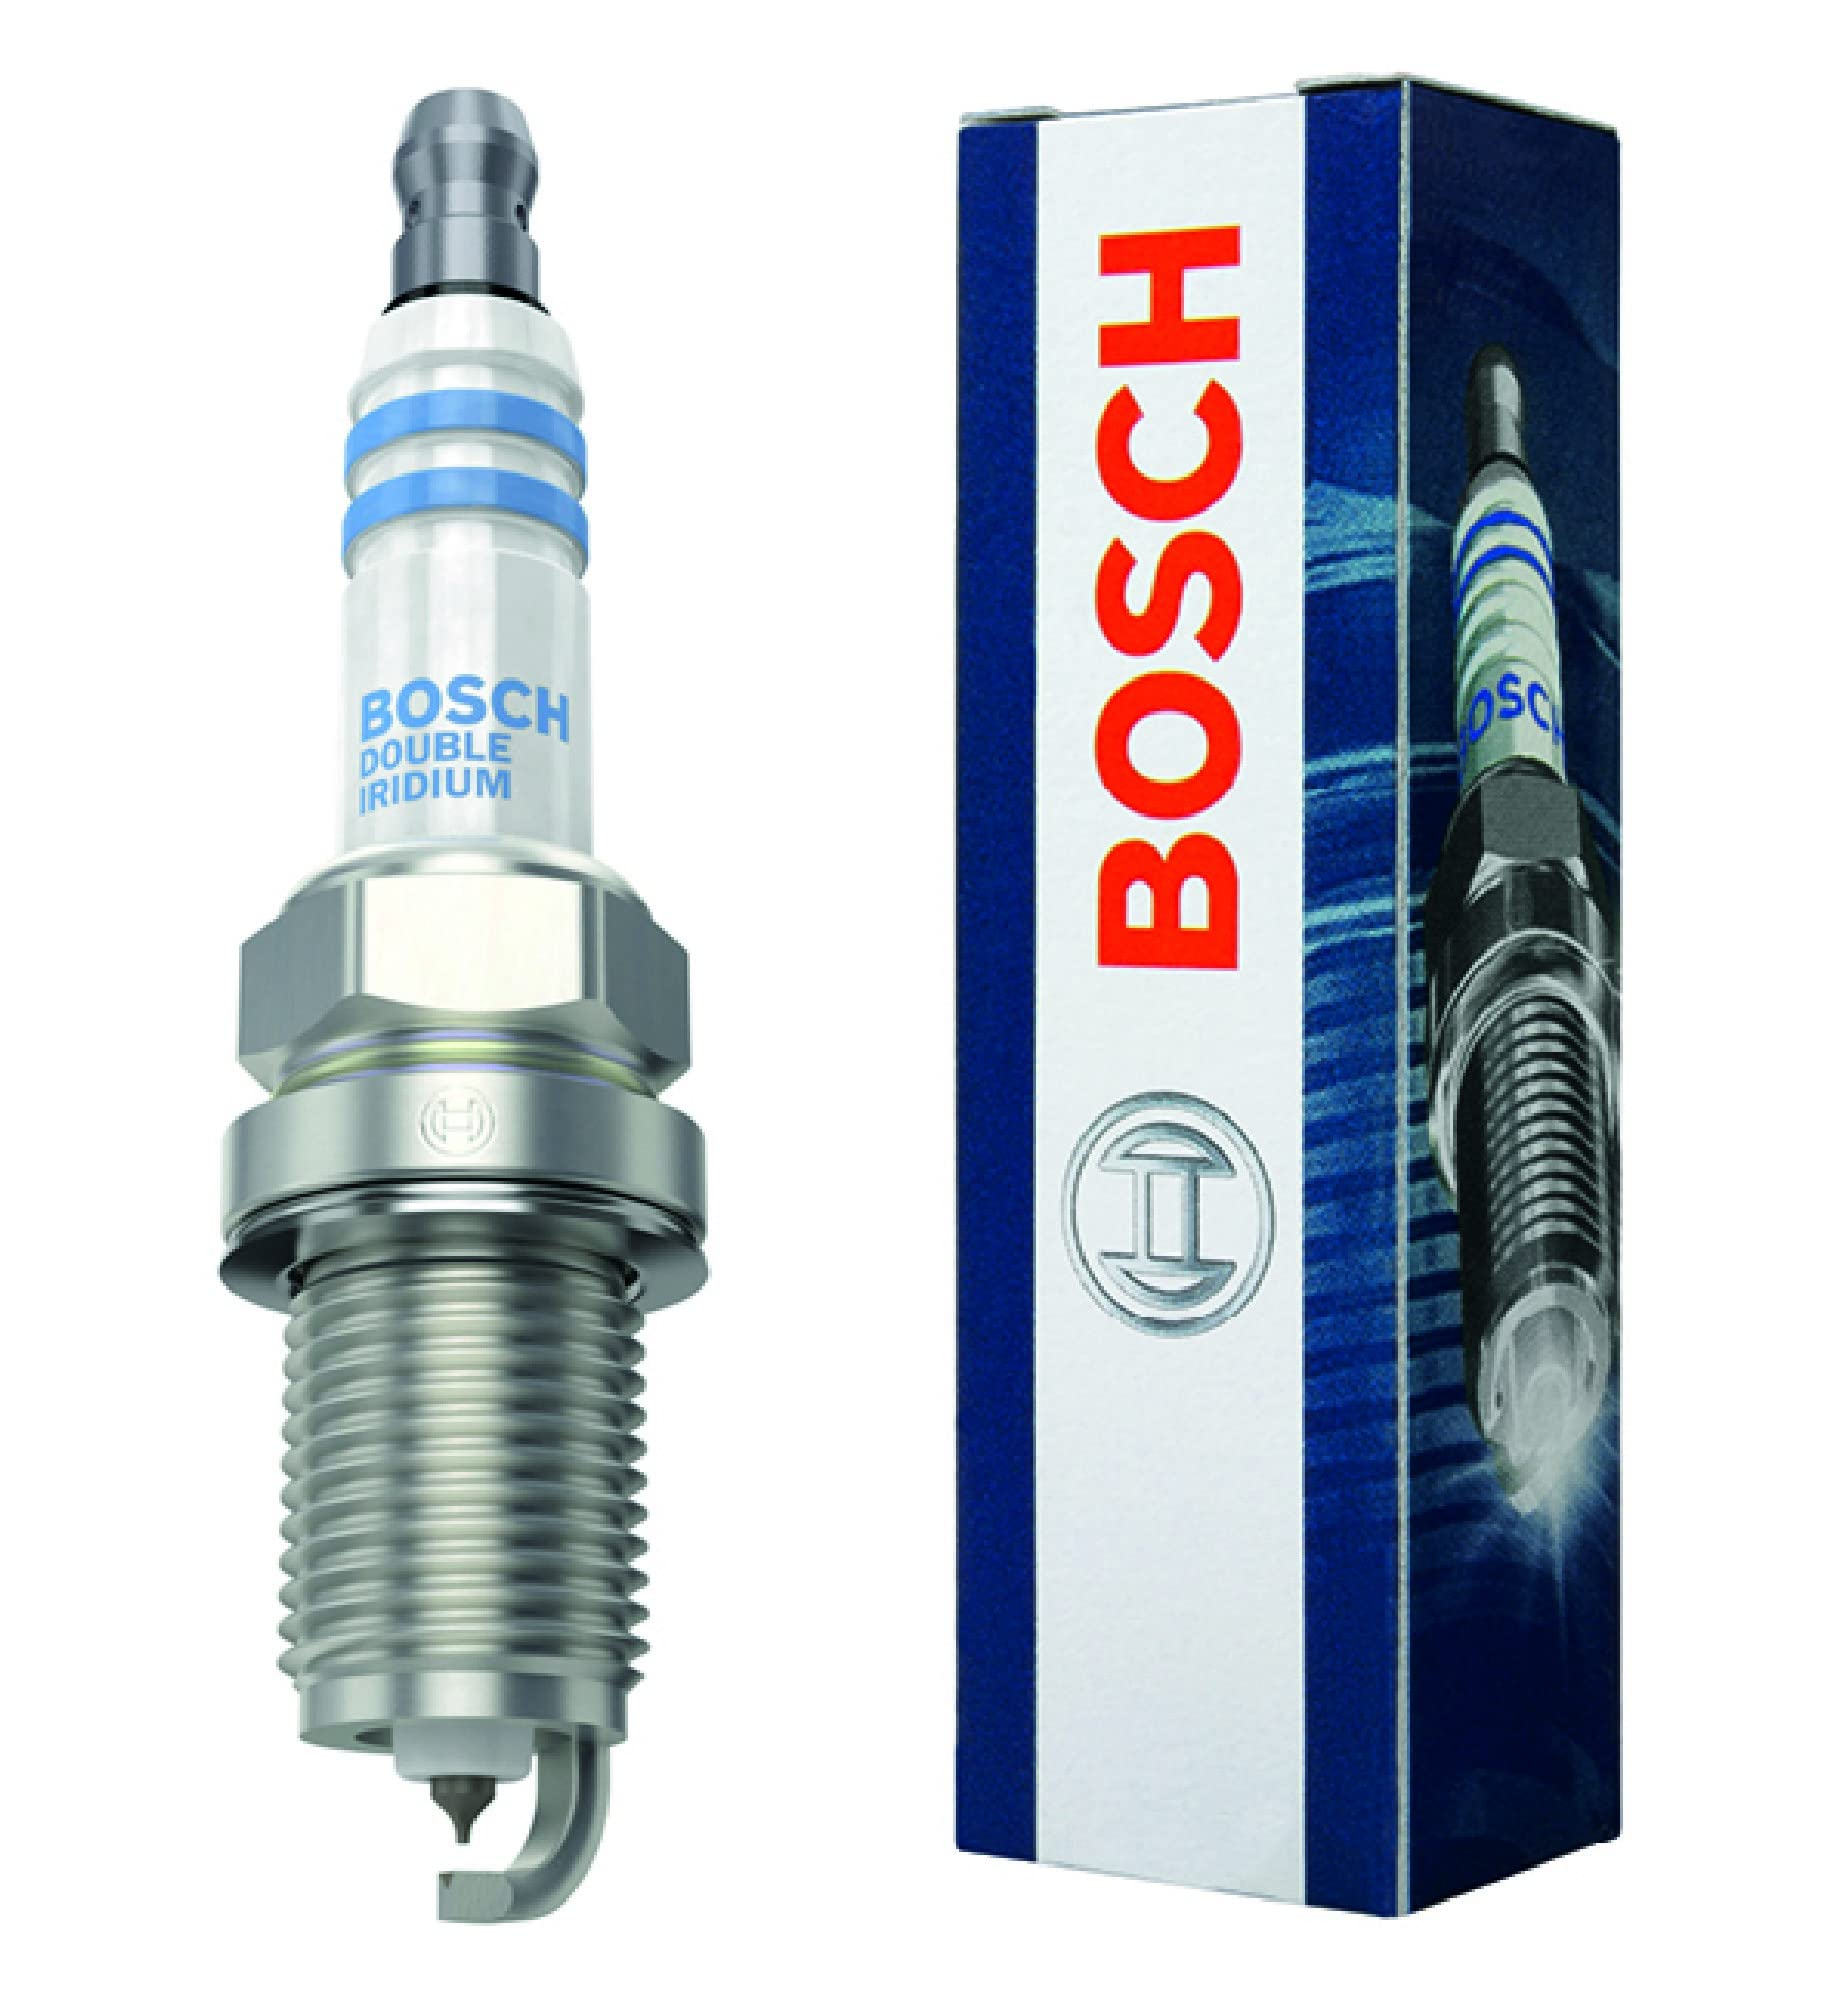 Bosch FR7KII33X - Zündkerzen Double Iridium - 1 Stück von Bosch Automotive